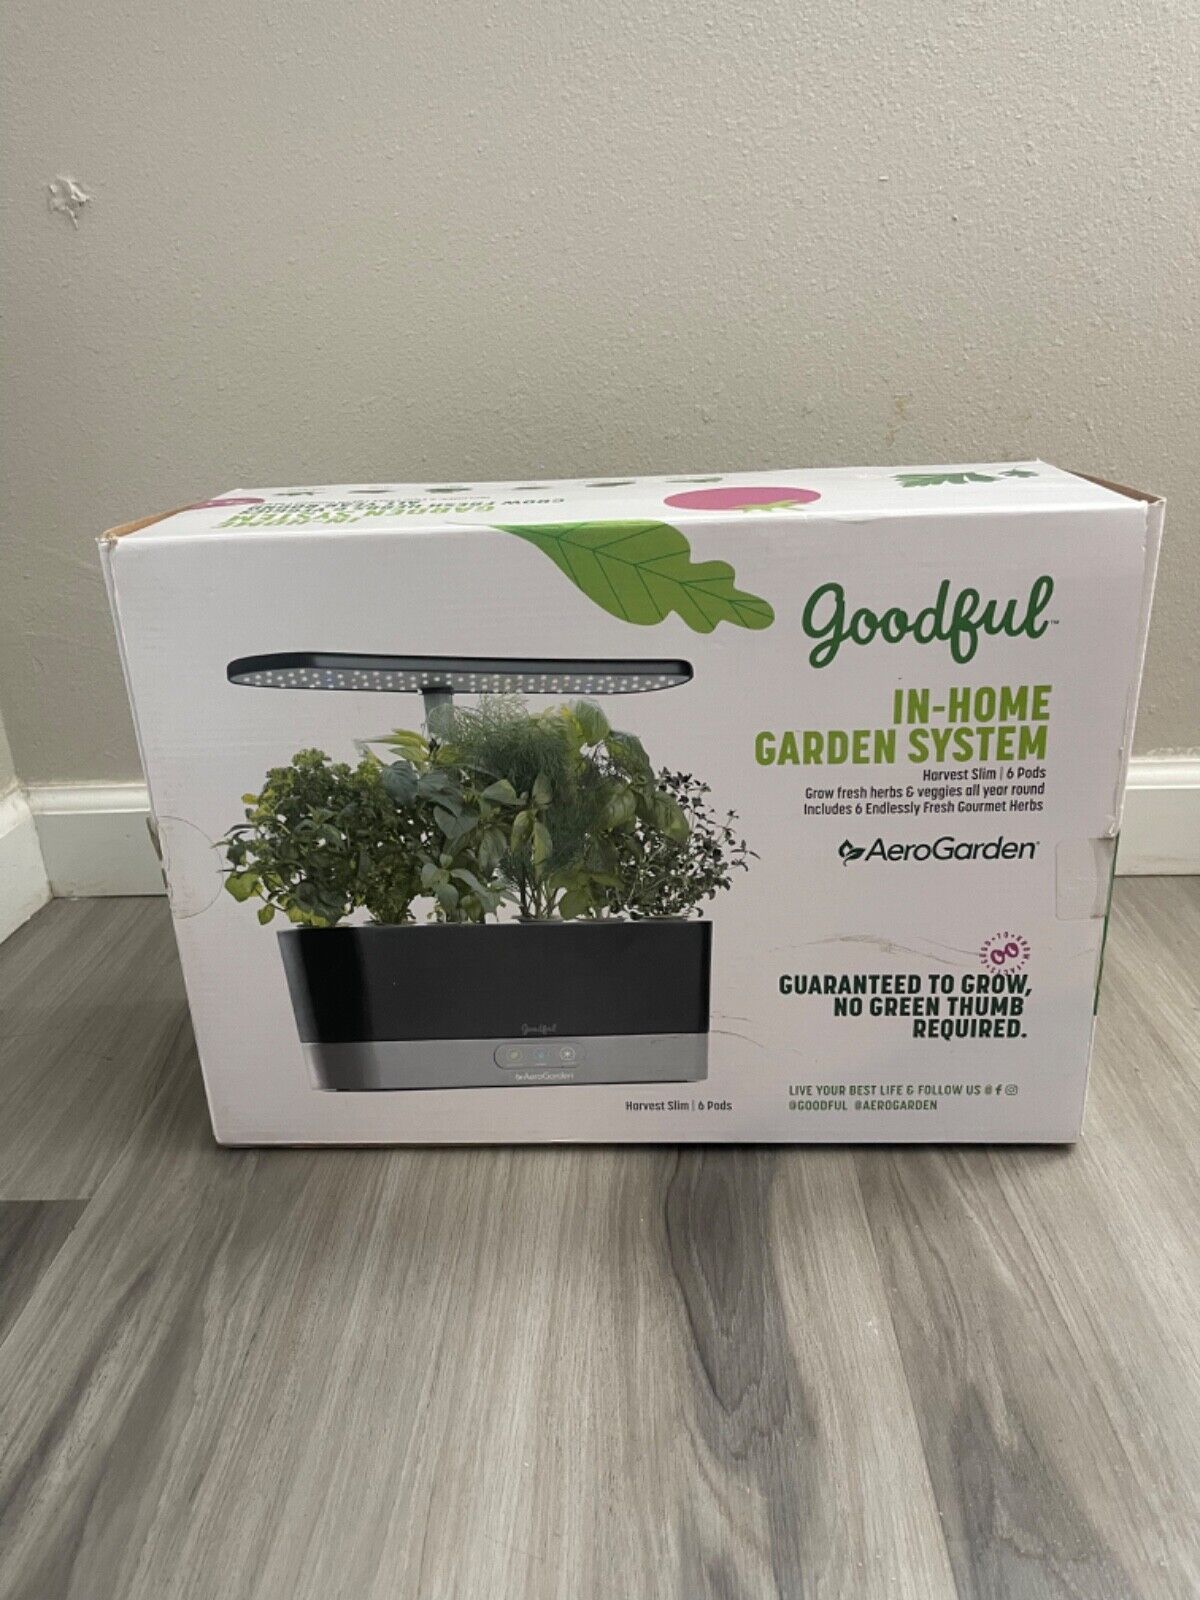 Goodful AeroGarden In home Garden System 6 Pod System